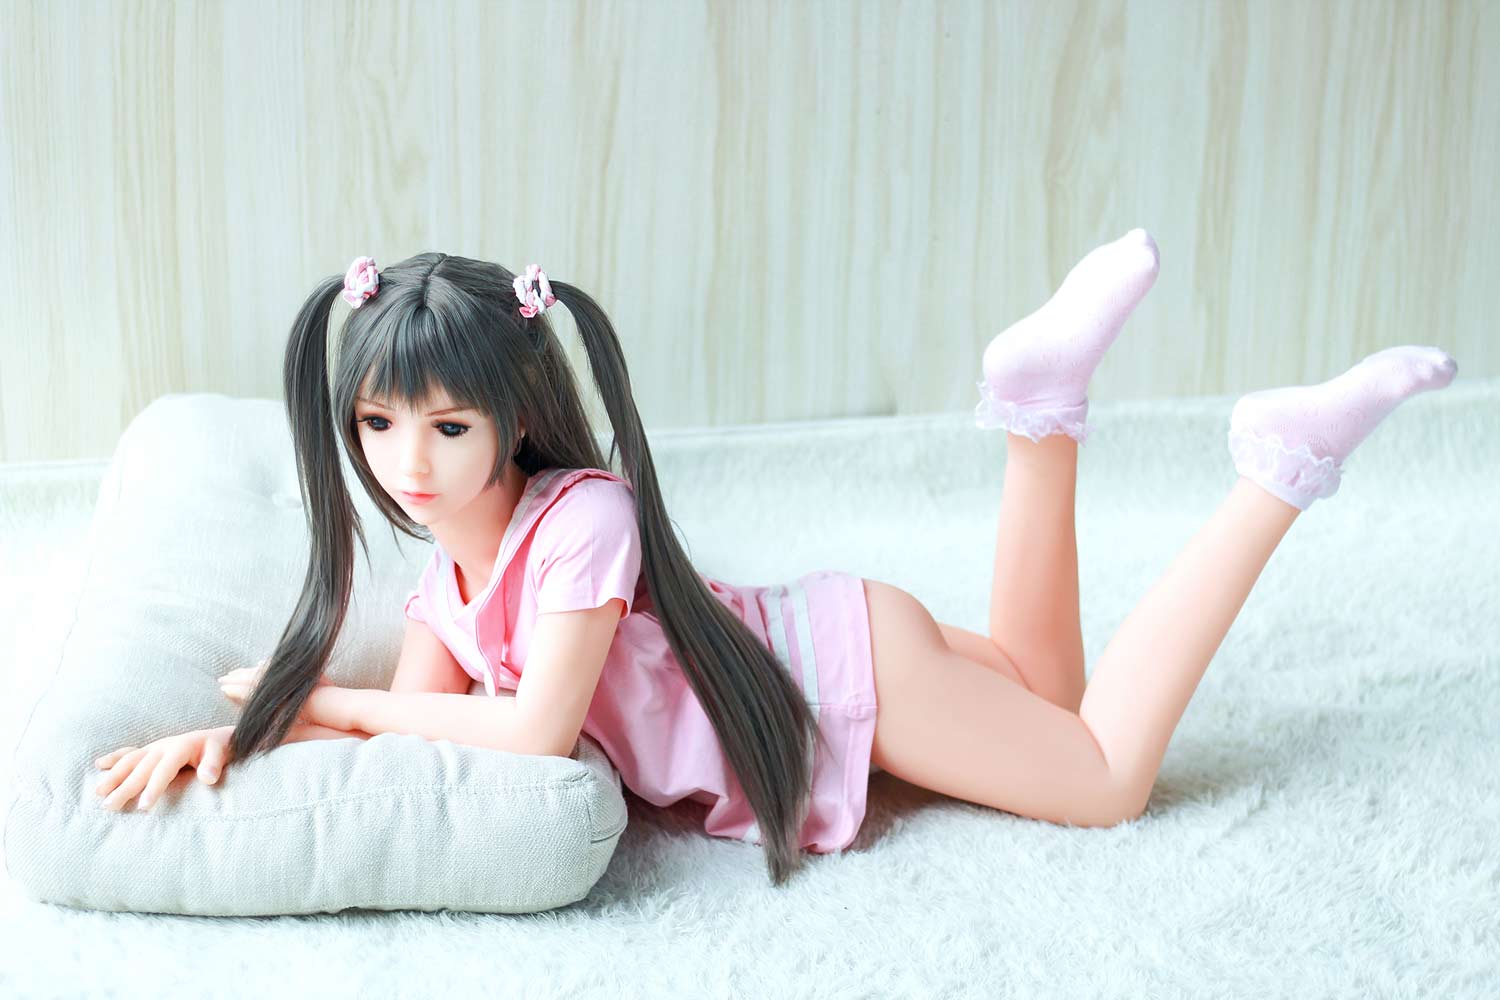 A mini sex doll lying on the floor with legs raised